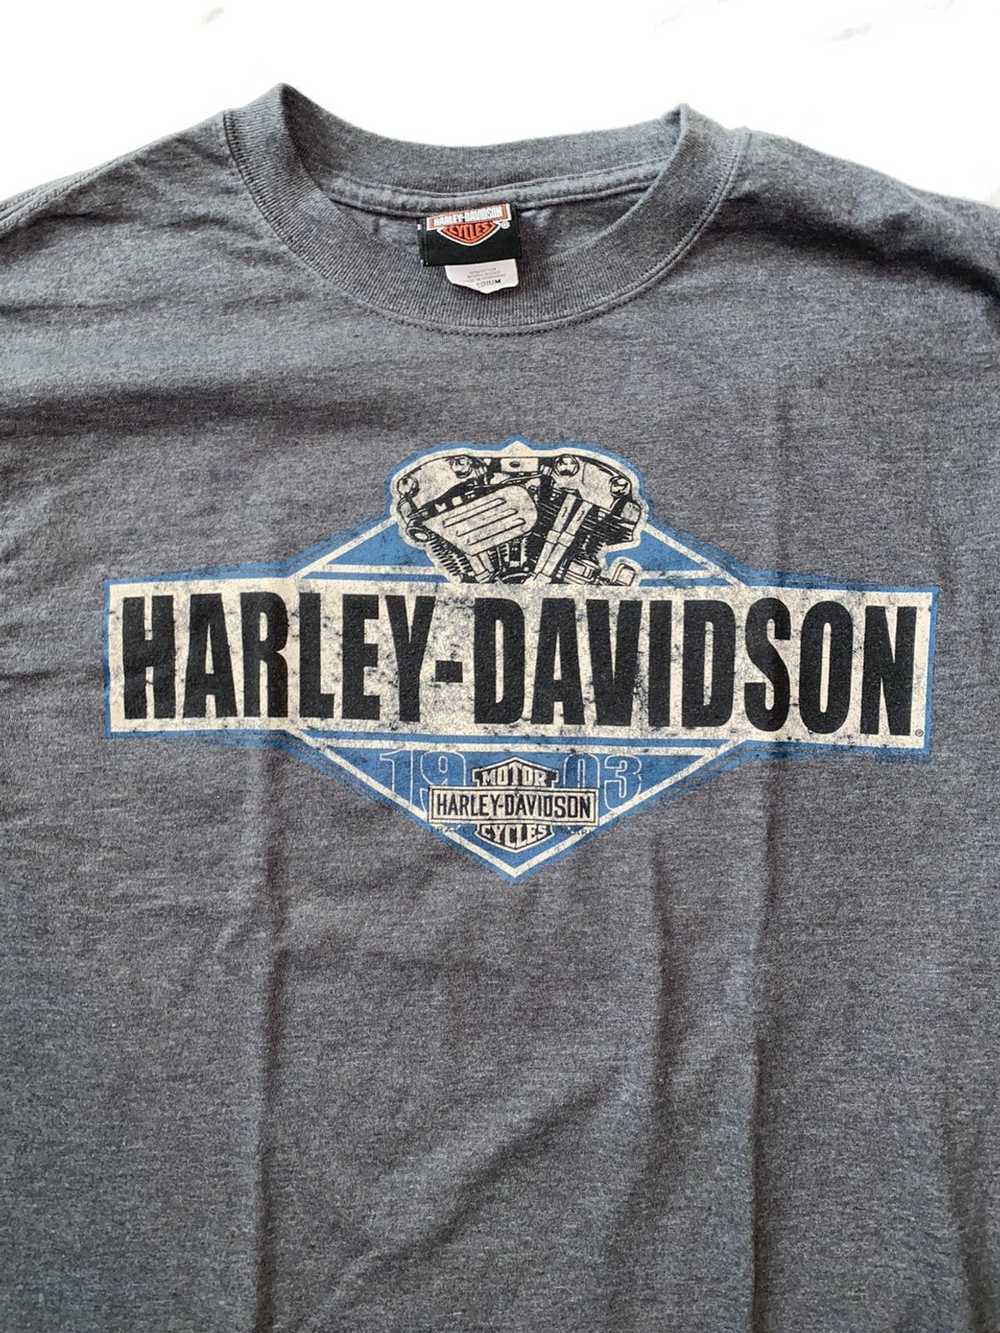 Harley Davidson Harley Davidson - image 2